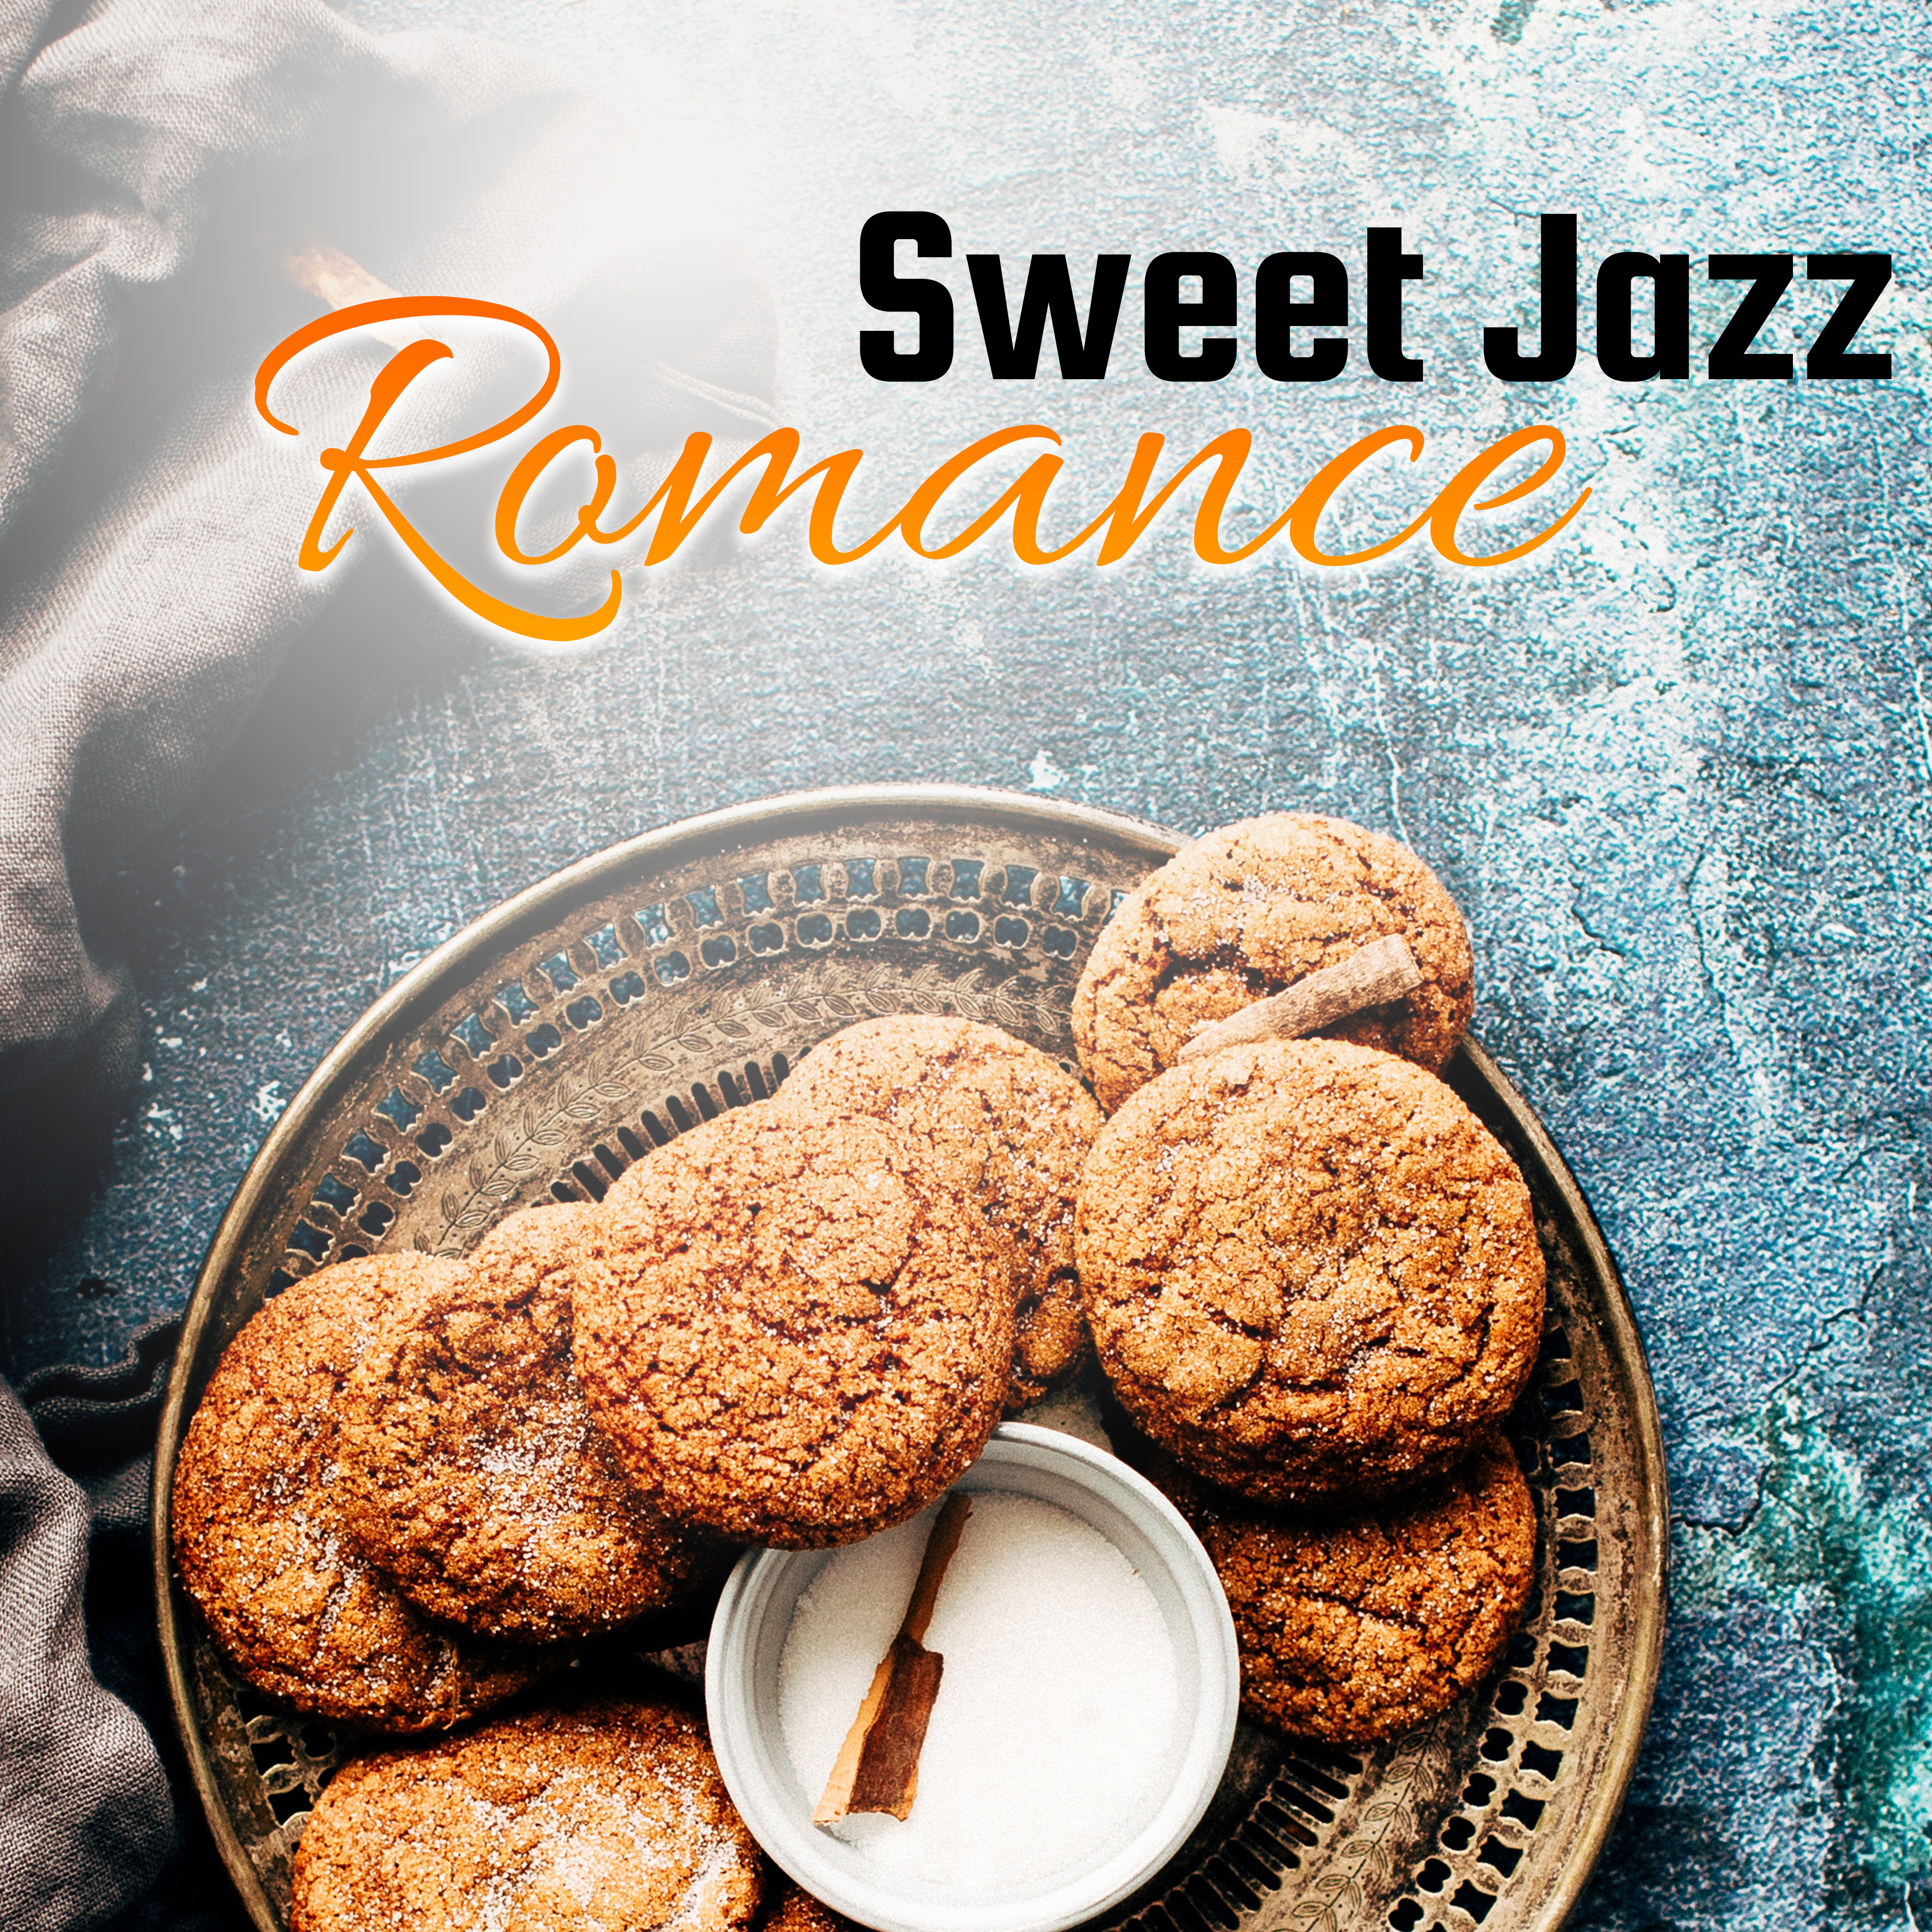 Sweet Jazz Romance – Romantic Music, Sweet Melodies of  Jazz 2017, **** Chilled Jazz, Relax